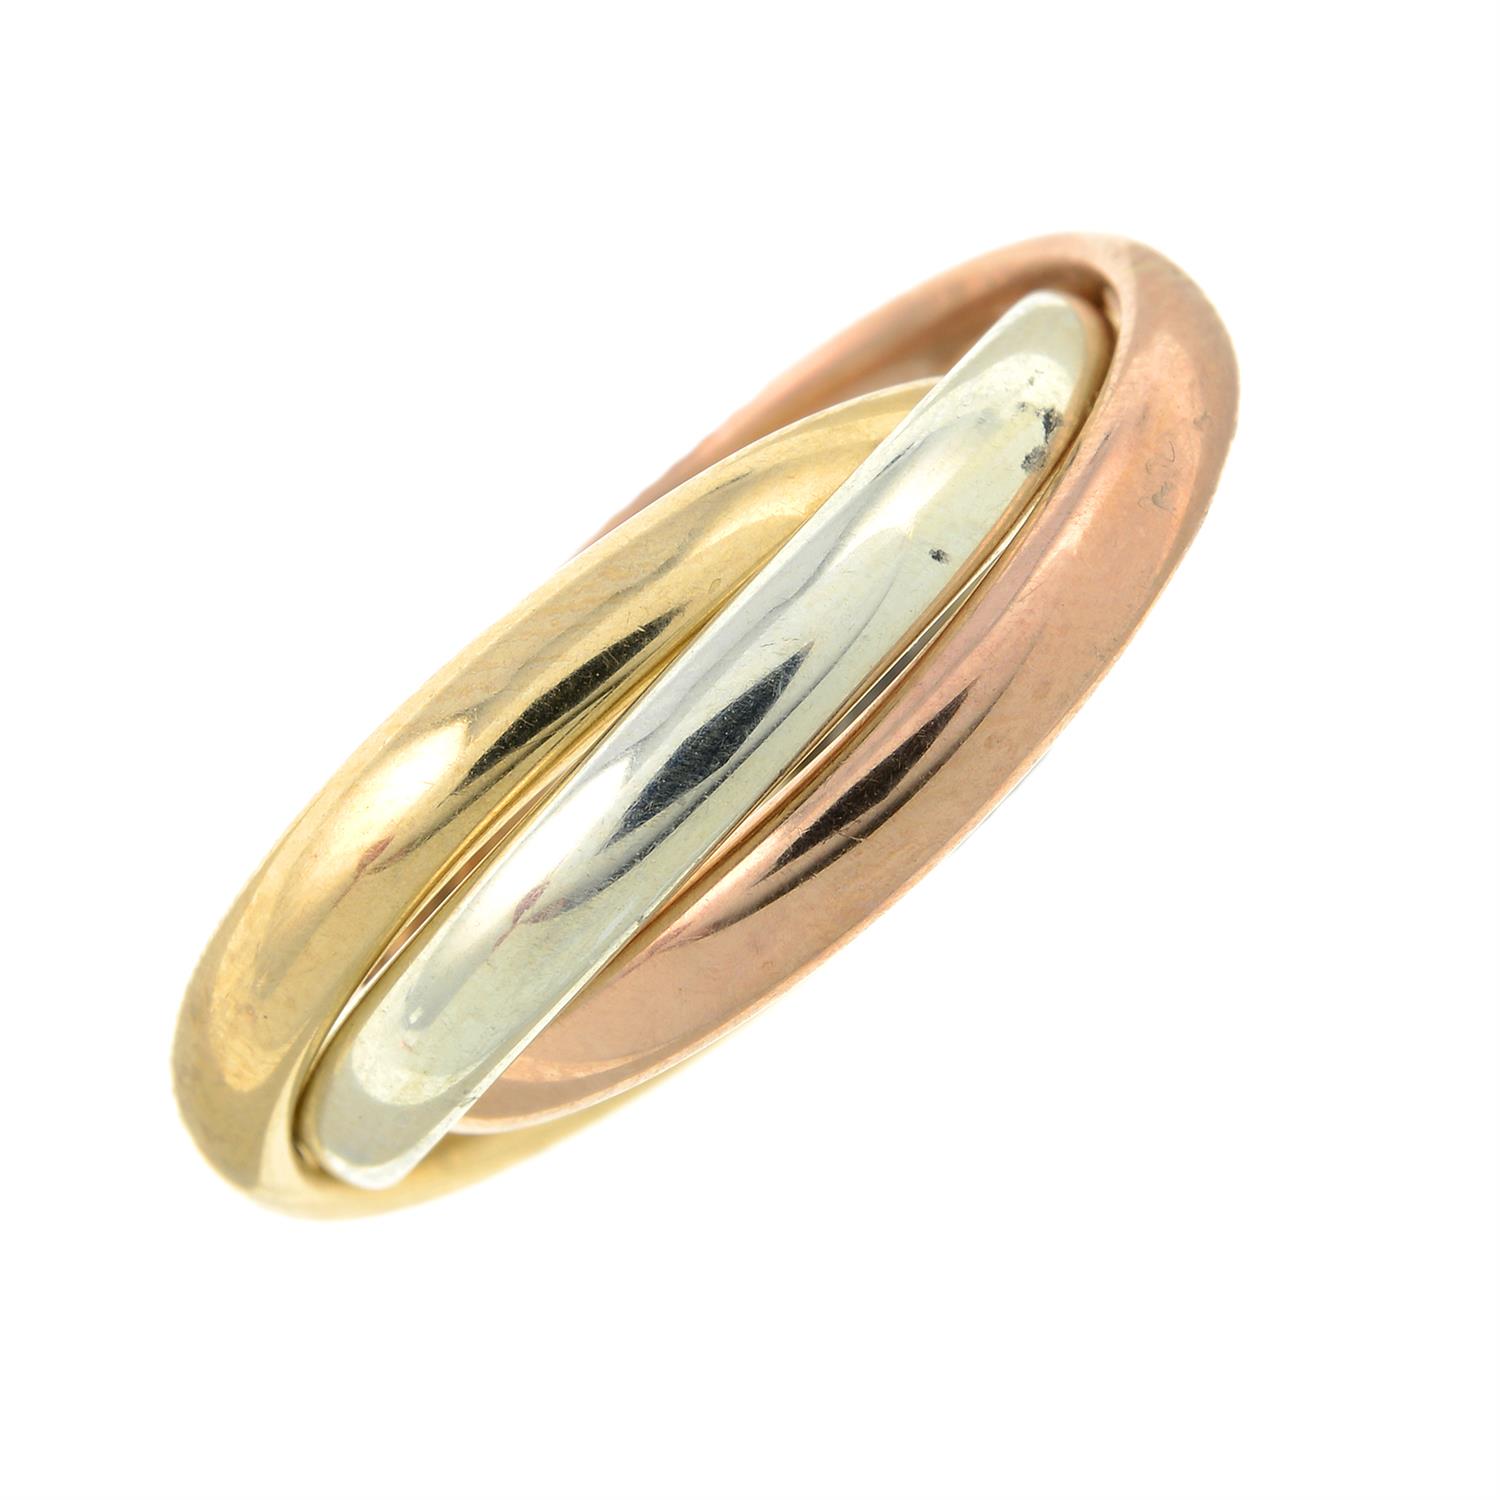 A 9ct tri-colour interlocking band ring.